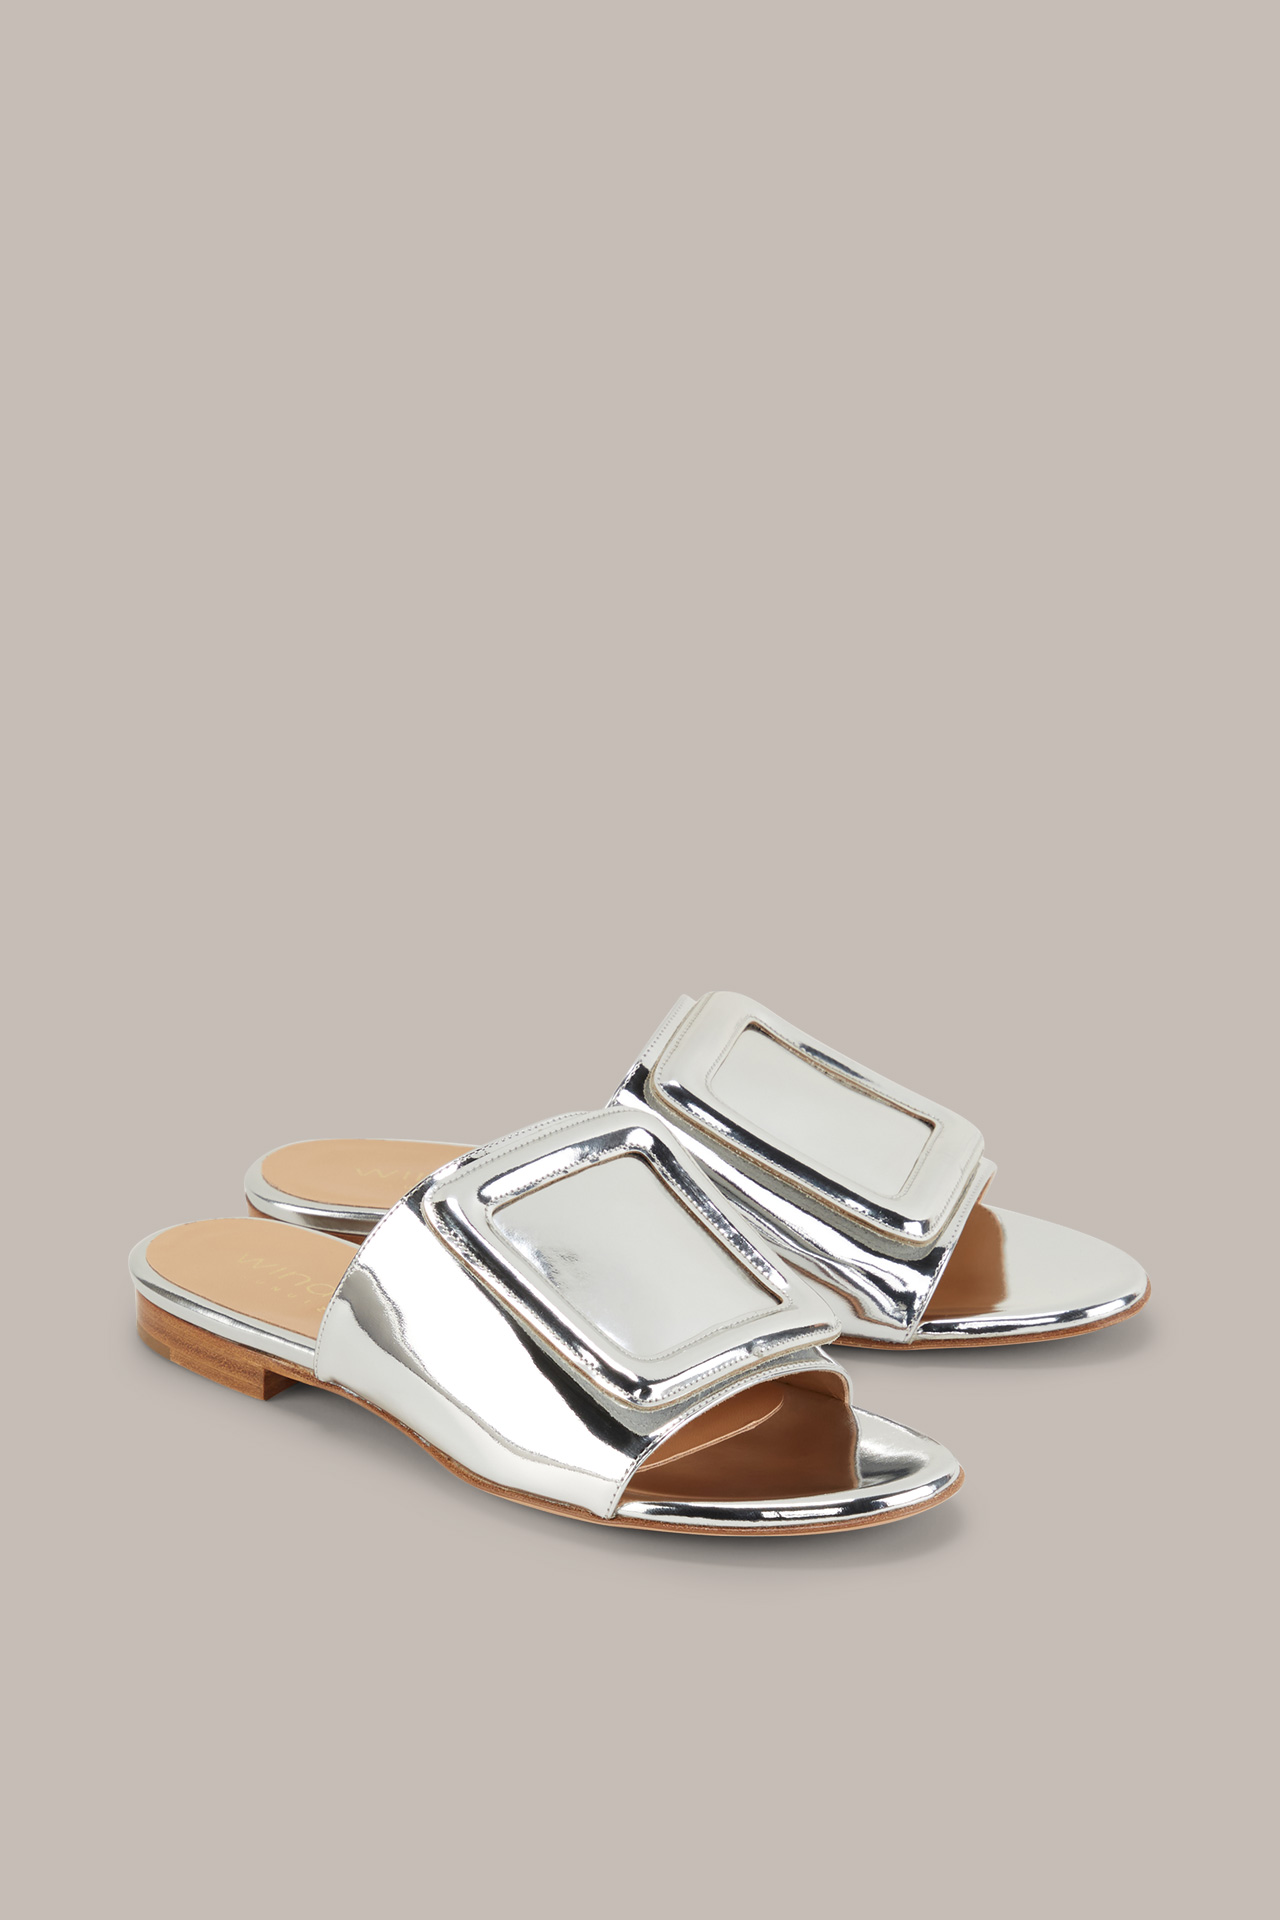 Leather Slides by Unützer in Silver